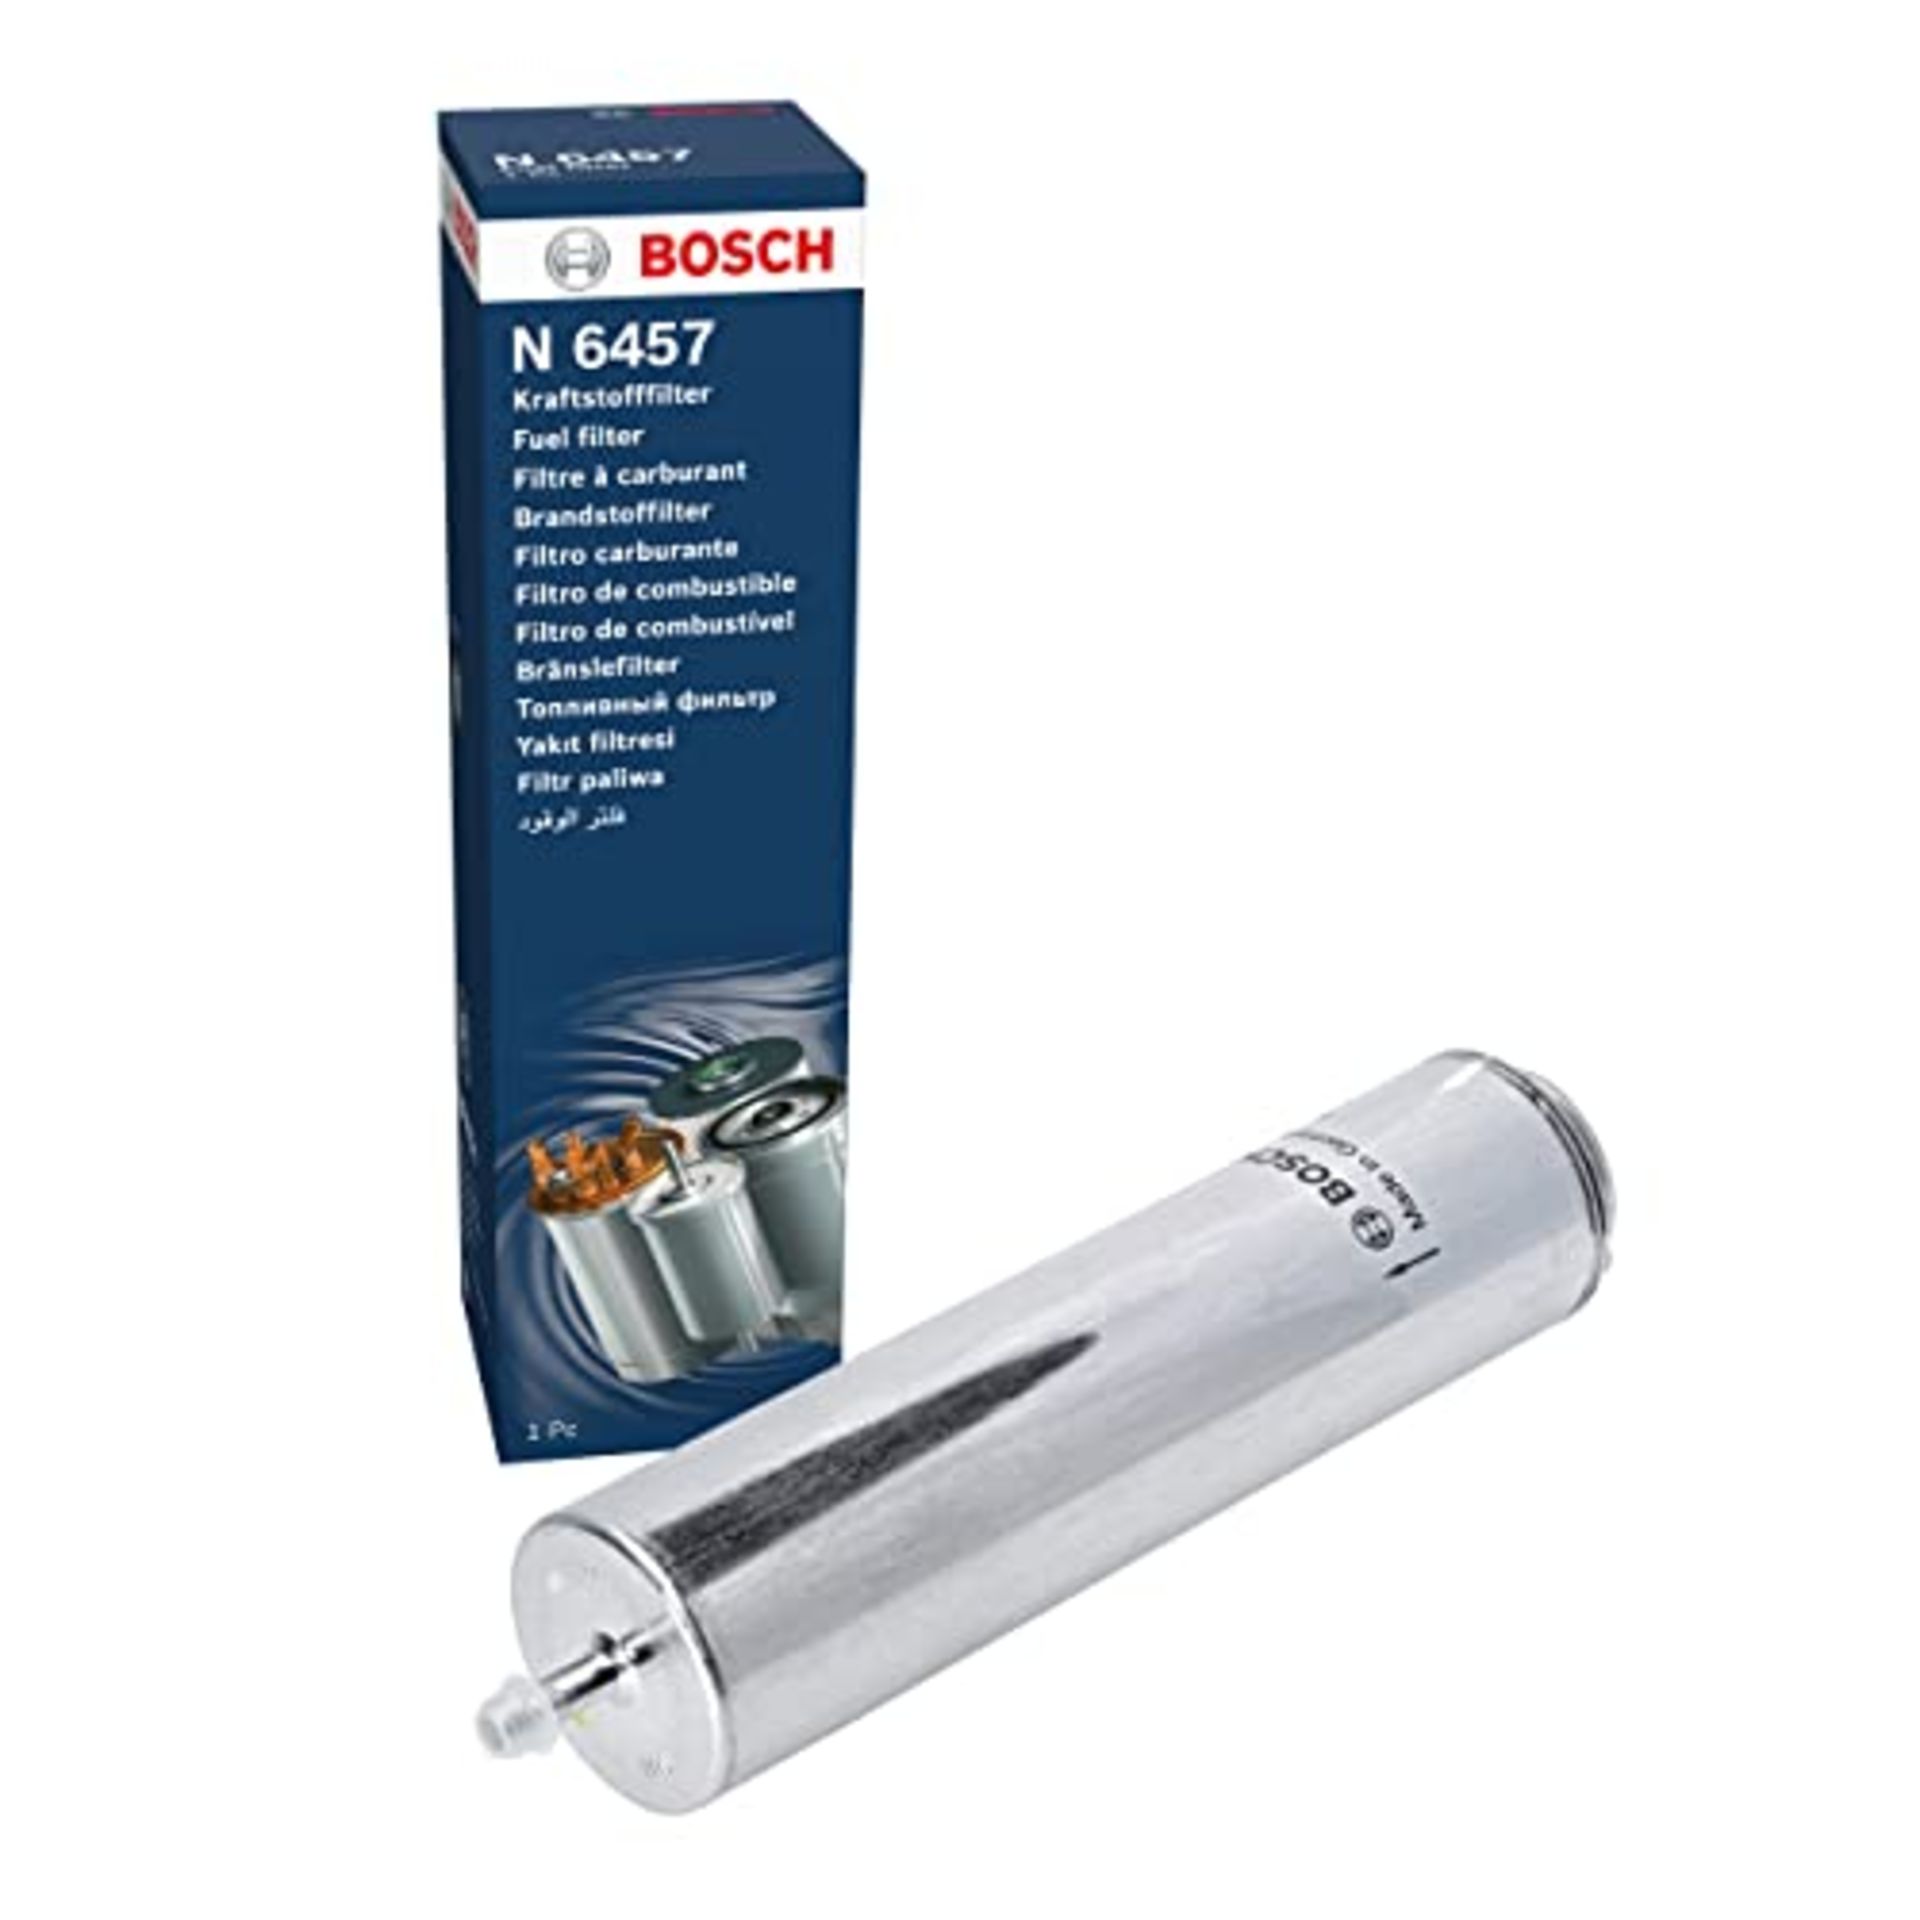 Bosch N6457 - Diesel Filter for Cars - Image 4 of 6